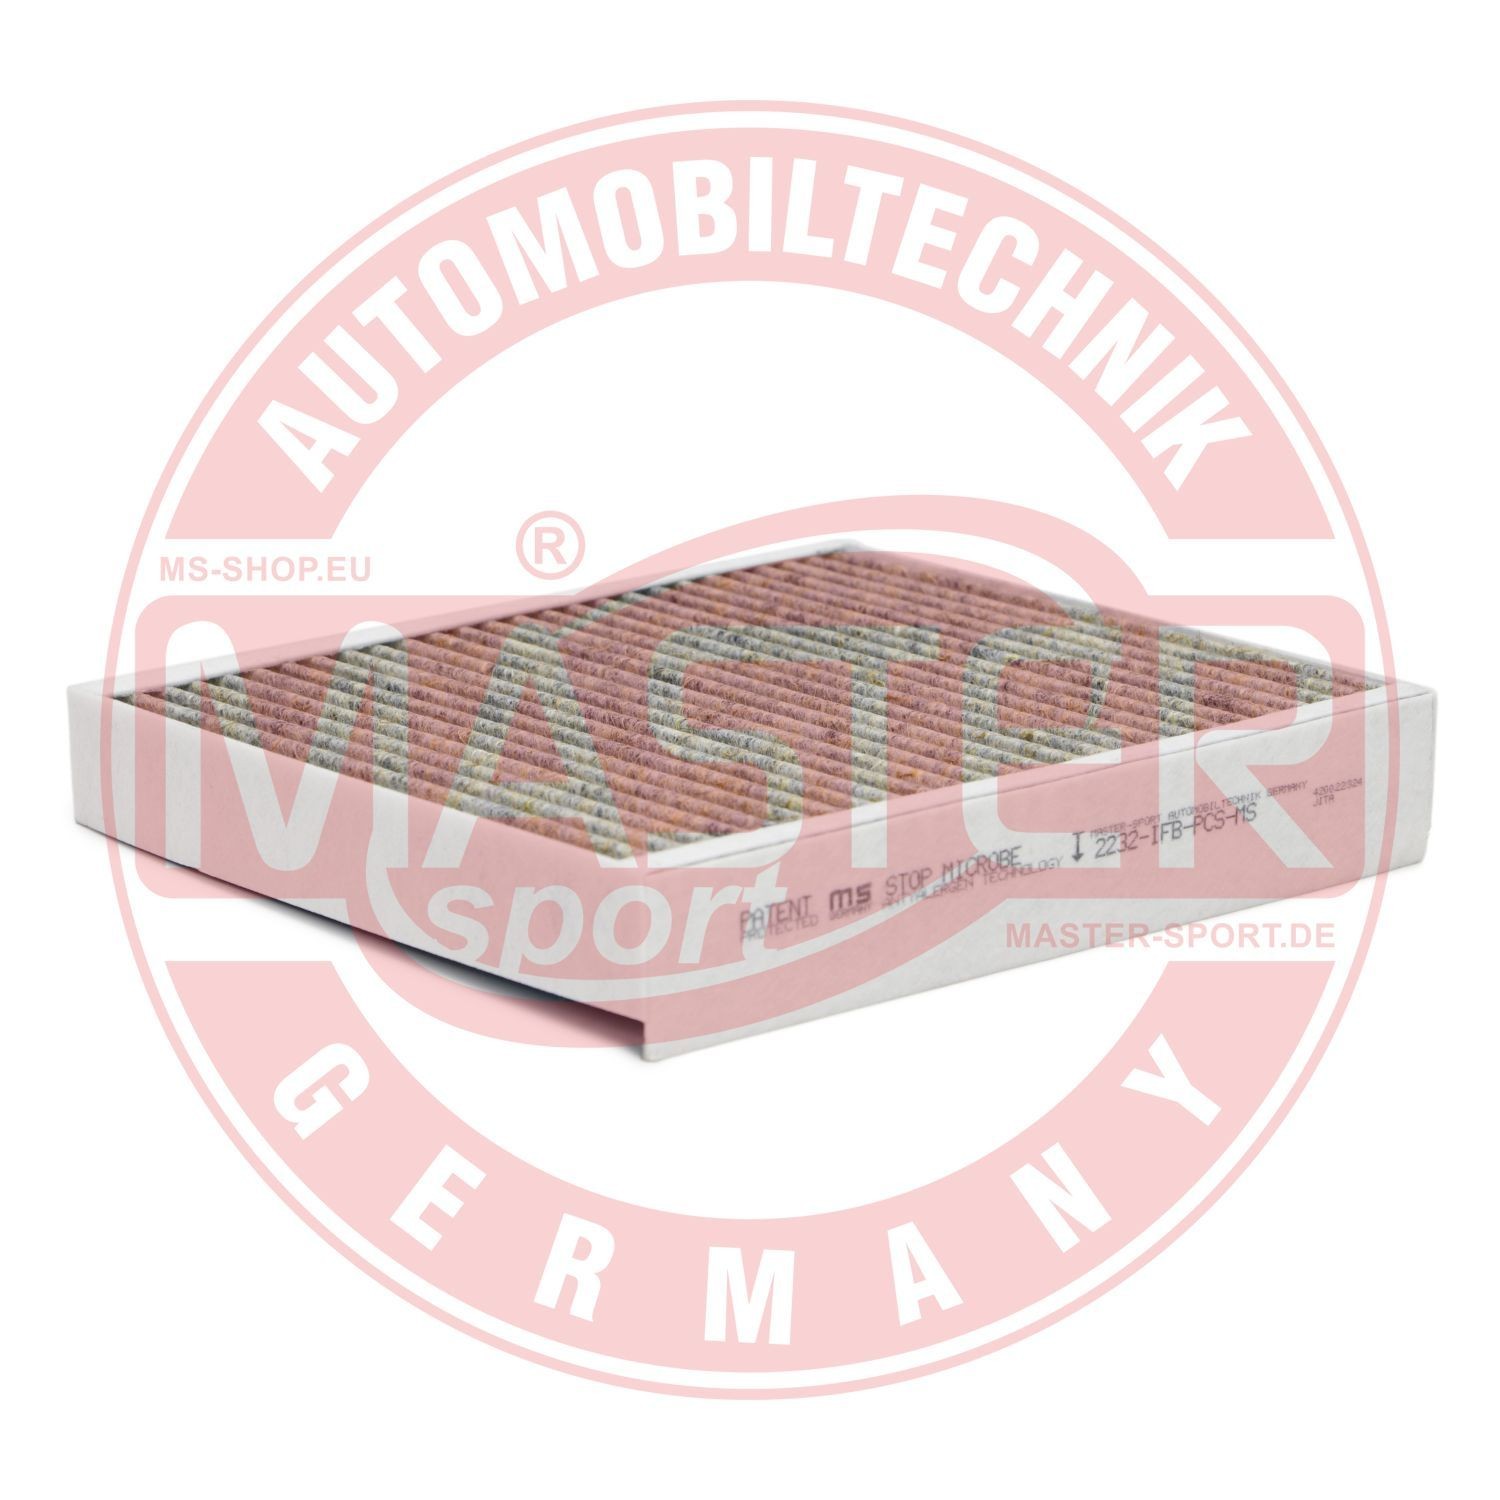 Alfa Romeo 159 Air conditioning parts - Pollen filter MASTER-SPORT 2232-IFB-PCS-MS